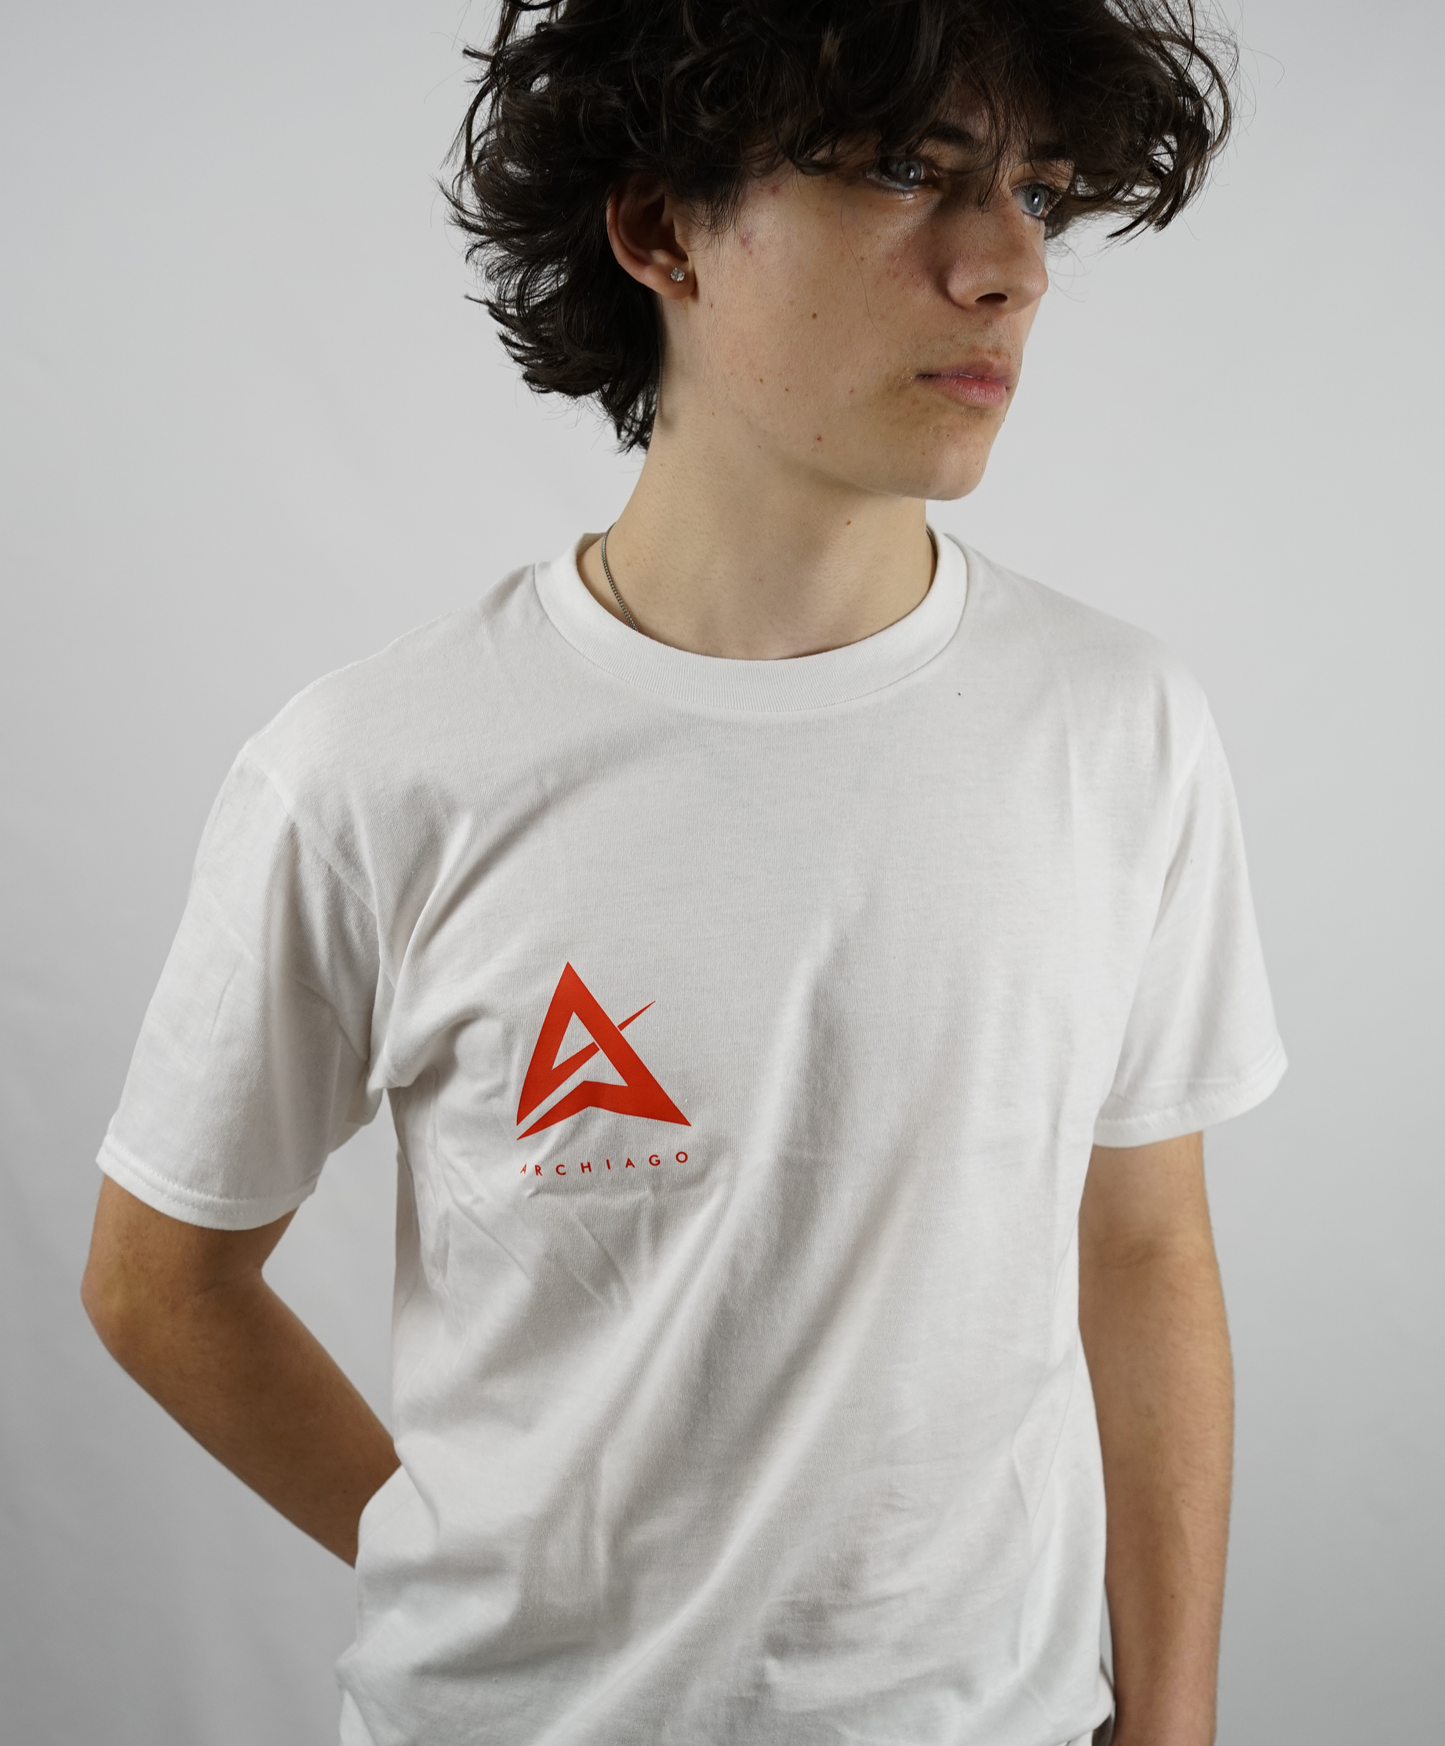 Archiago graffiti t-shirt